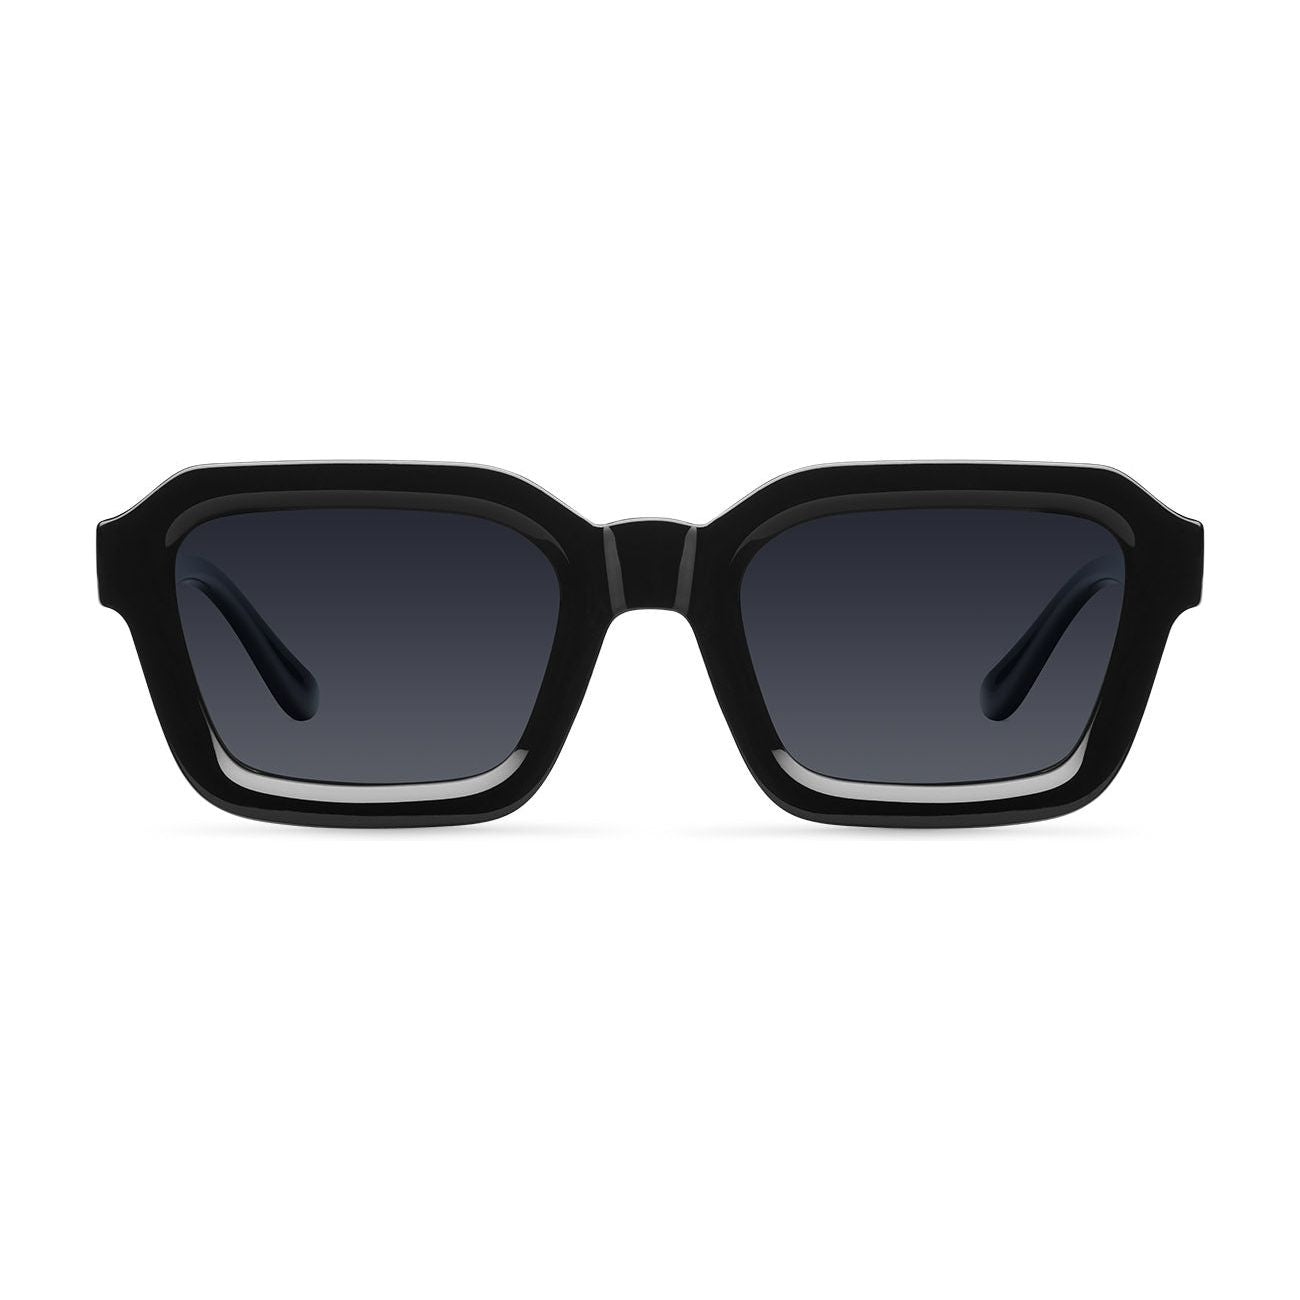 KME Nayah All Black Luxury Unisex Sunglasses: Stylish 70s Inspired Eyewear - KME means the very best